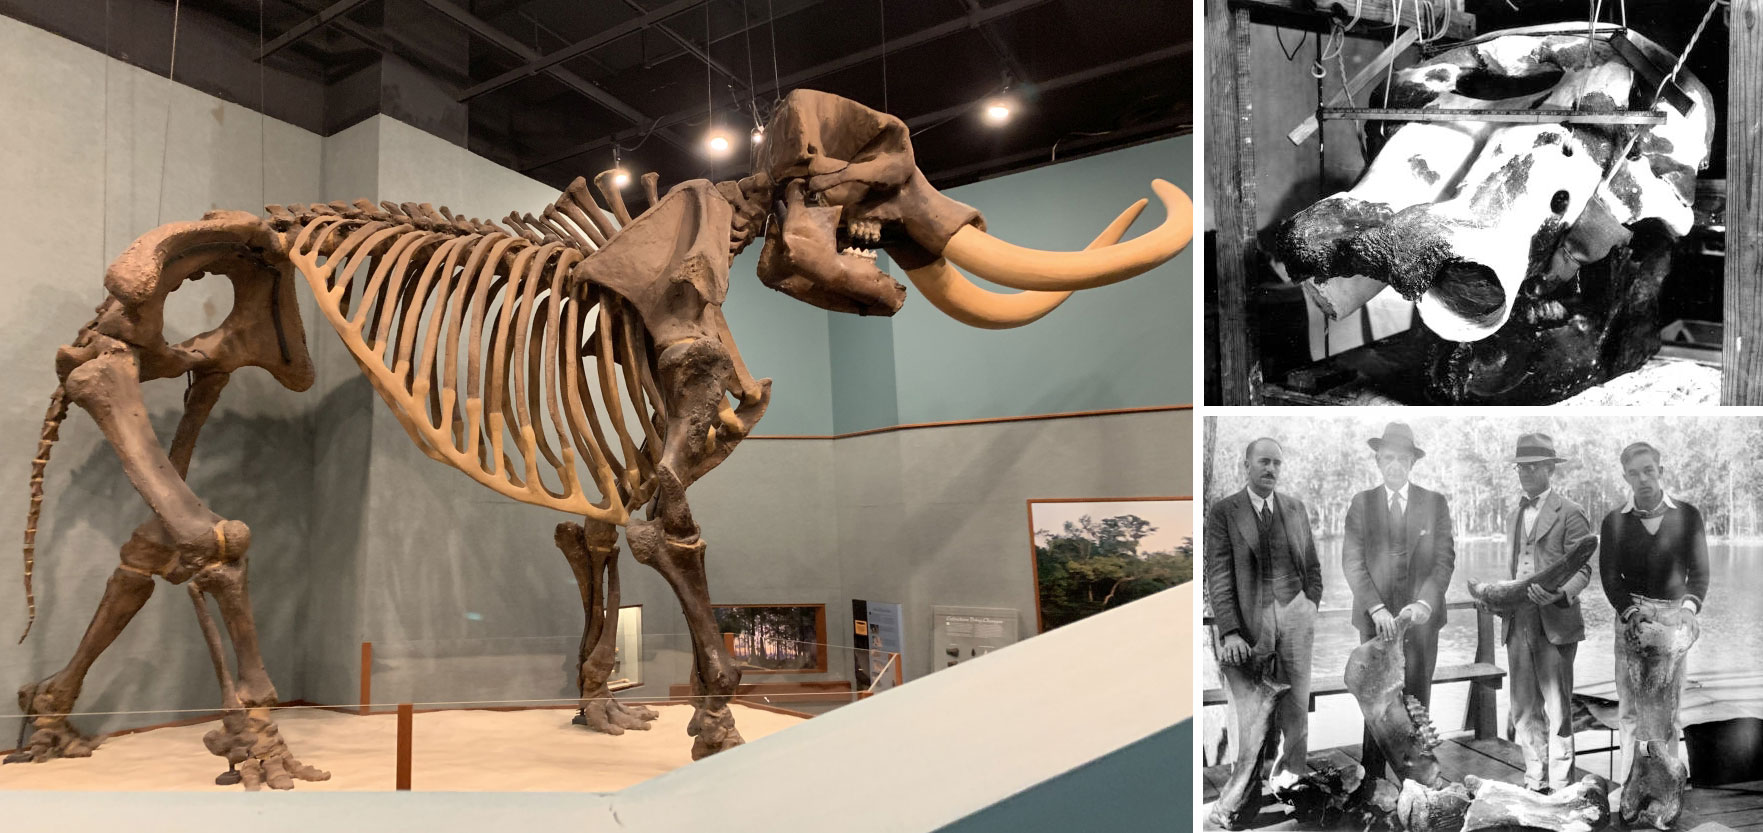 3-Panel figure of mastodons. Panel 1. Herman the mastodon on display in Tallahassee, Florida. Panel 2: Historical image of a mastodon skull from Wakulla Springs, Florida. Panel 3: Historical image of a group of men with mastodon fossils from Wakulla Springs in the 1930s.